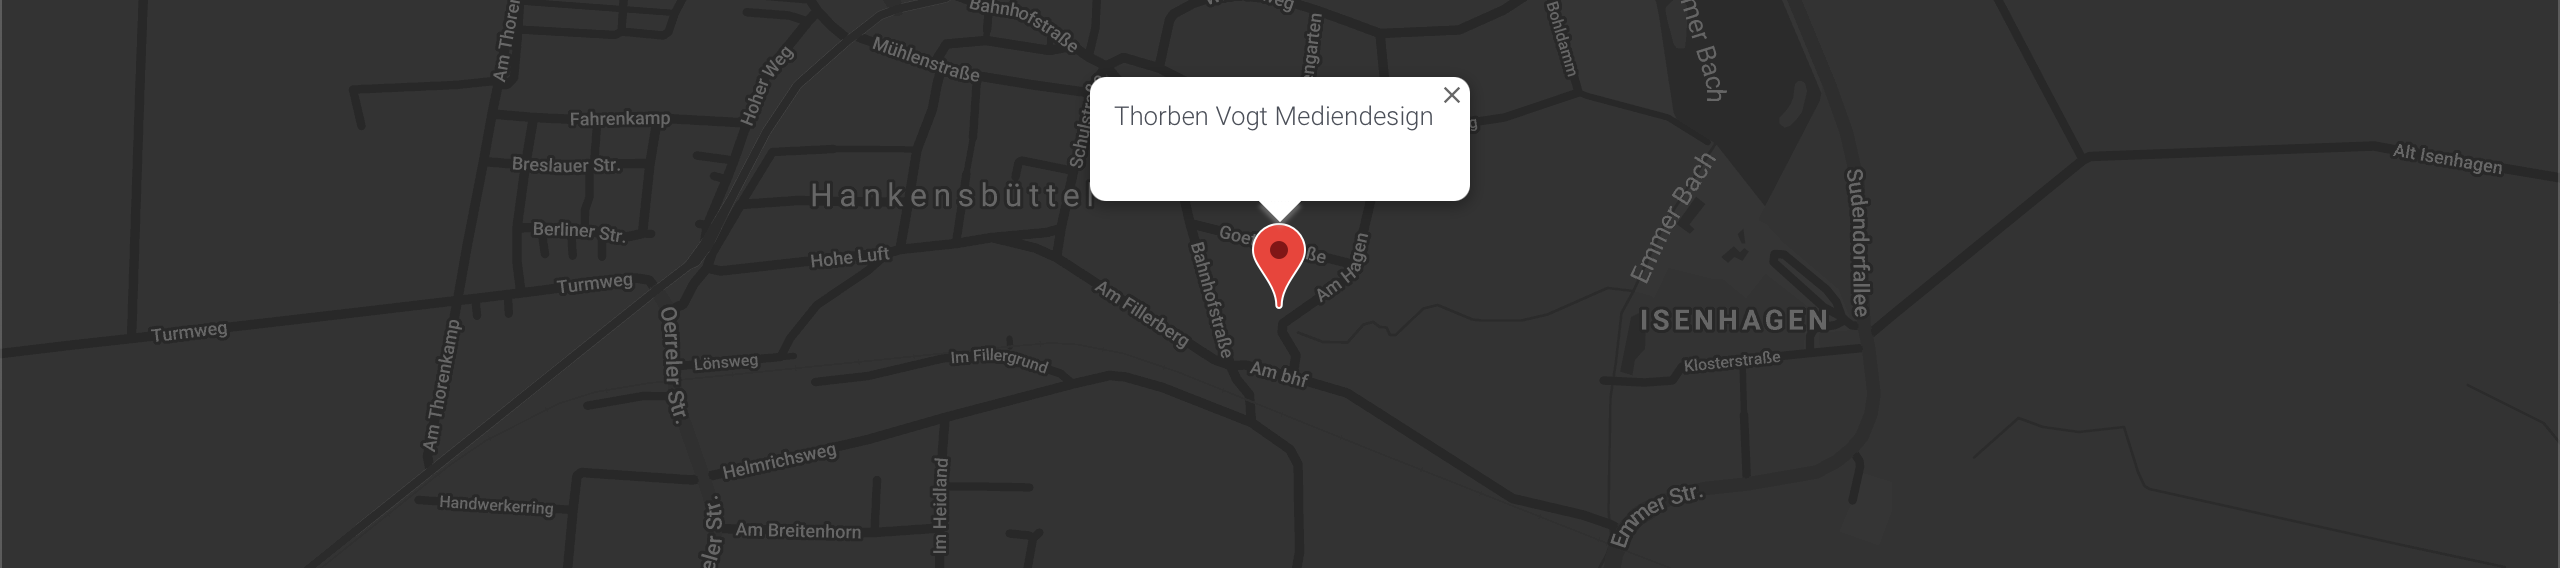 Thorben Vogt Mediendesign Landkarte